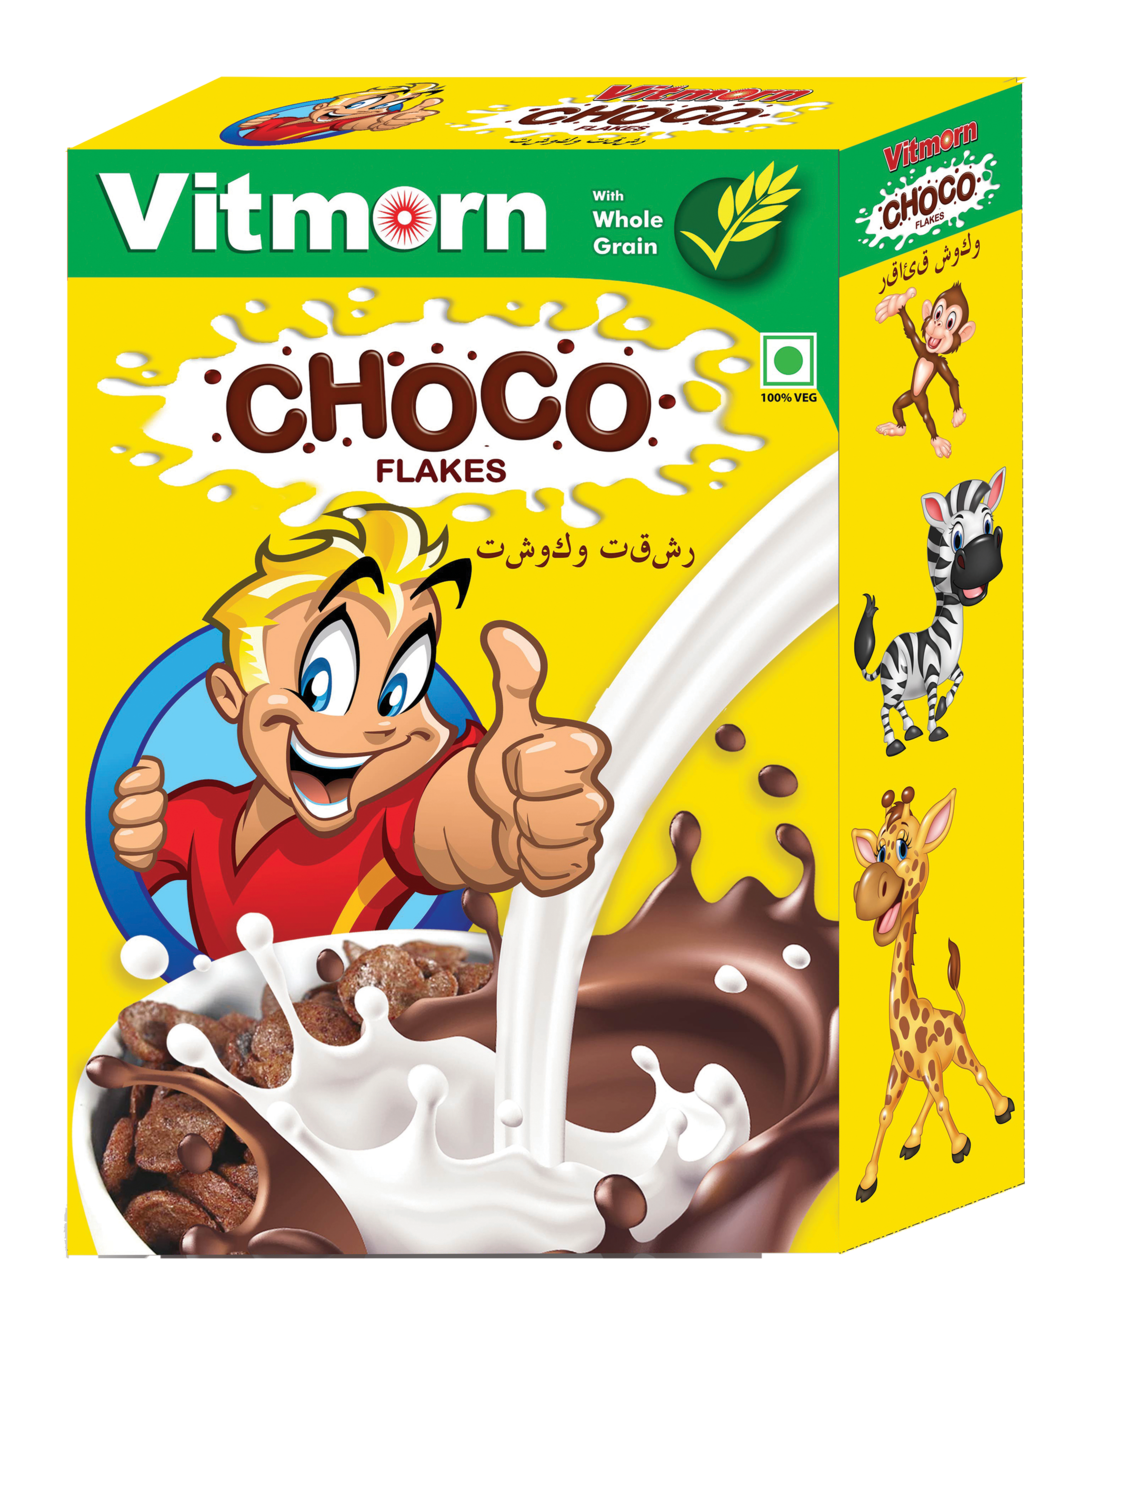 Vitmorn Choco